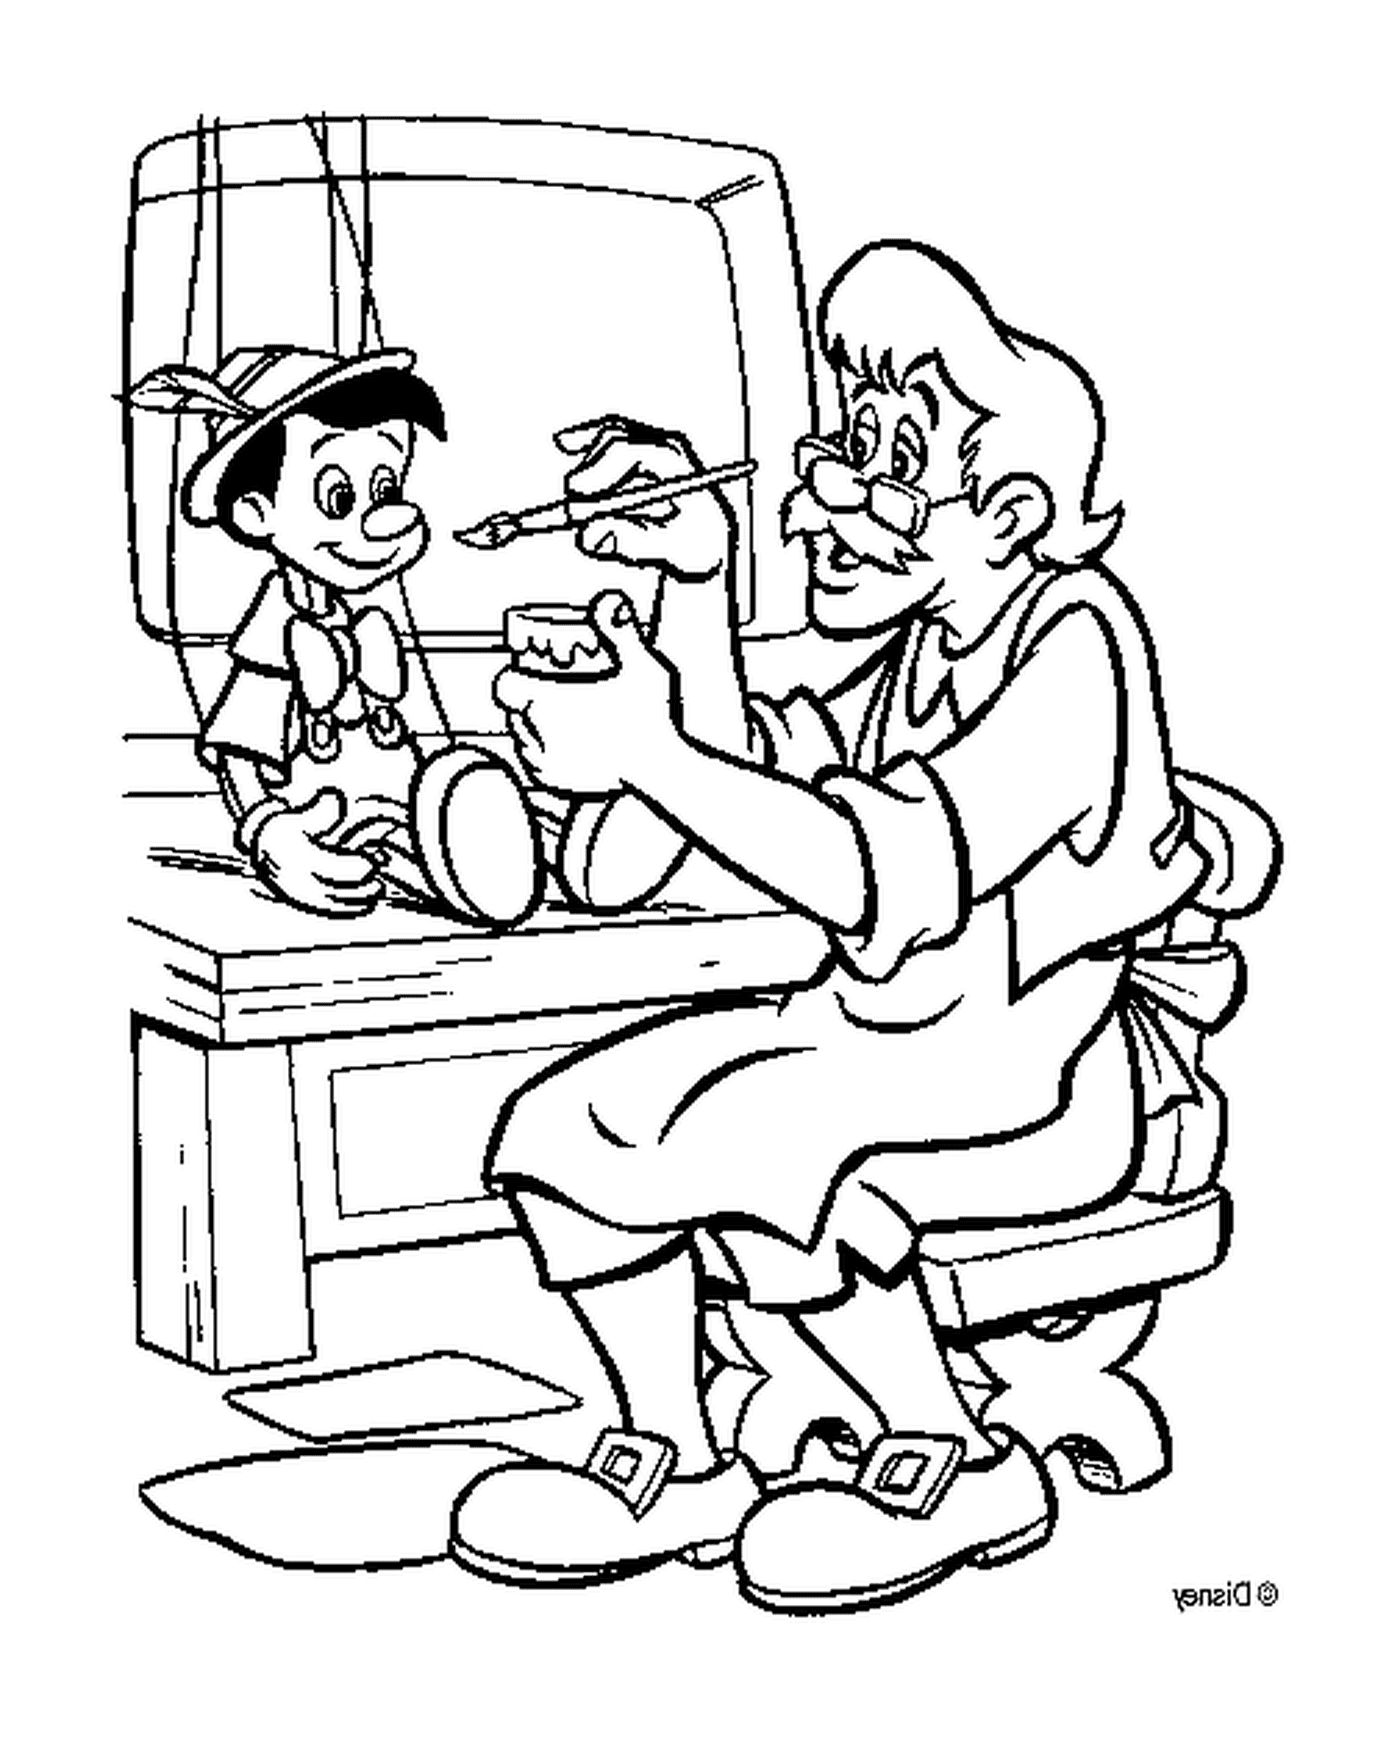  Geppetto在工作坊制造皮诺曹 